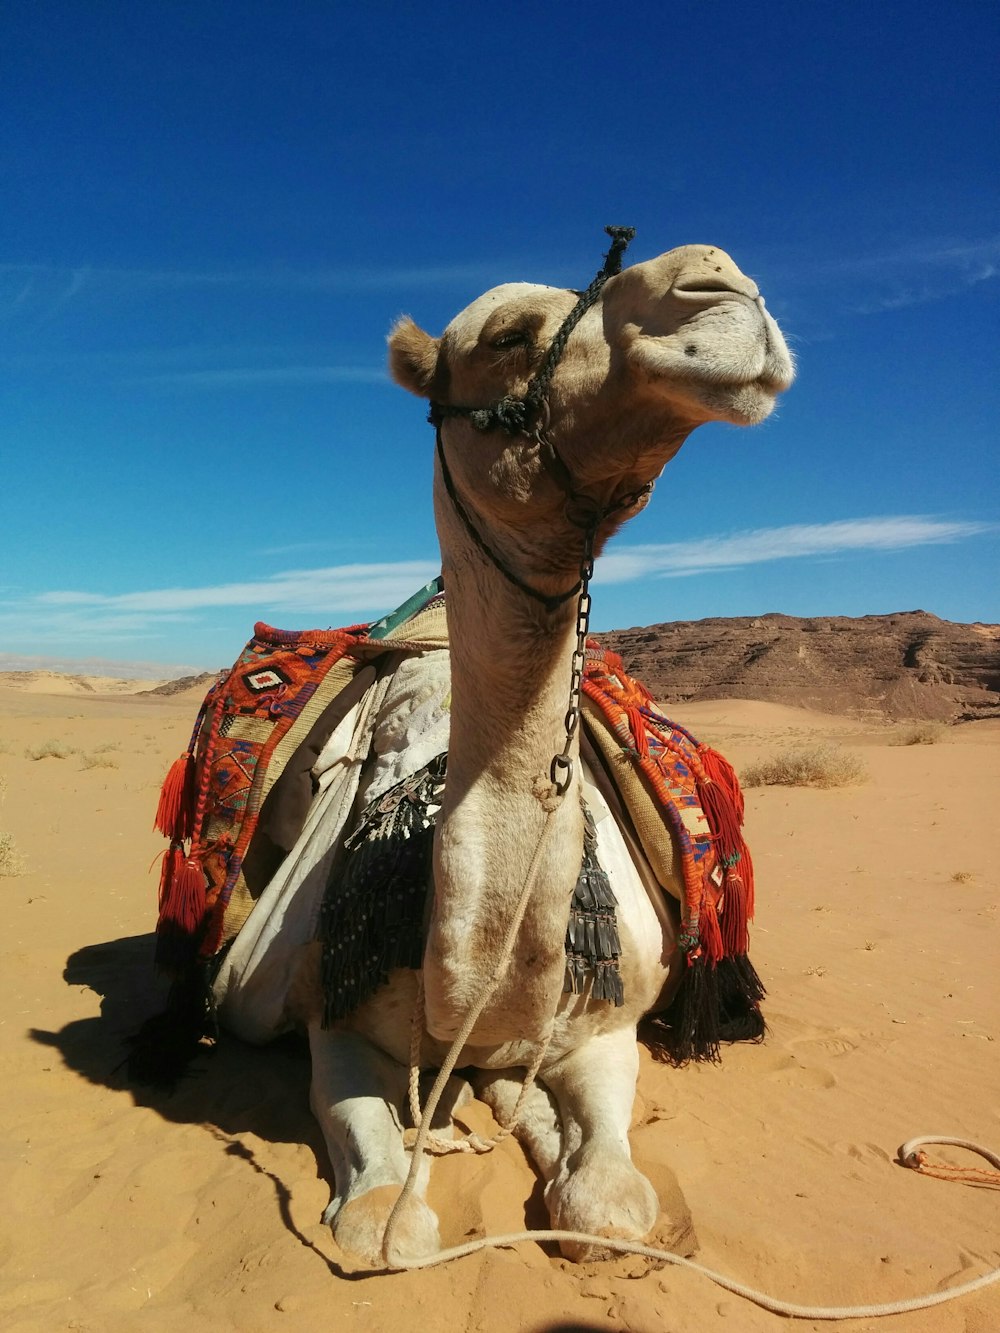 Braunes Kamel auf braunem Sand tagsüber